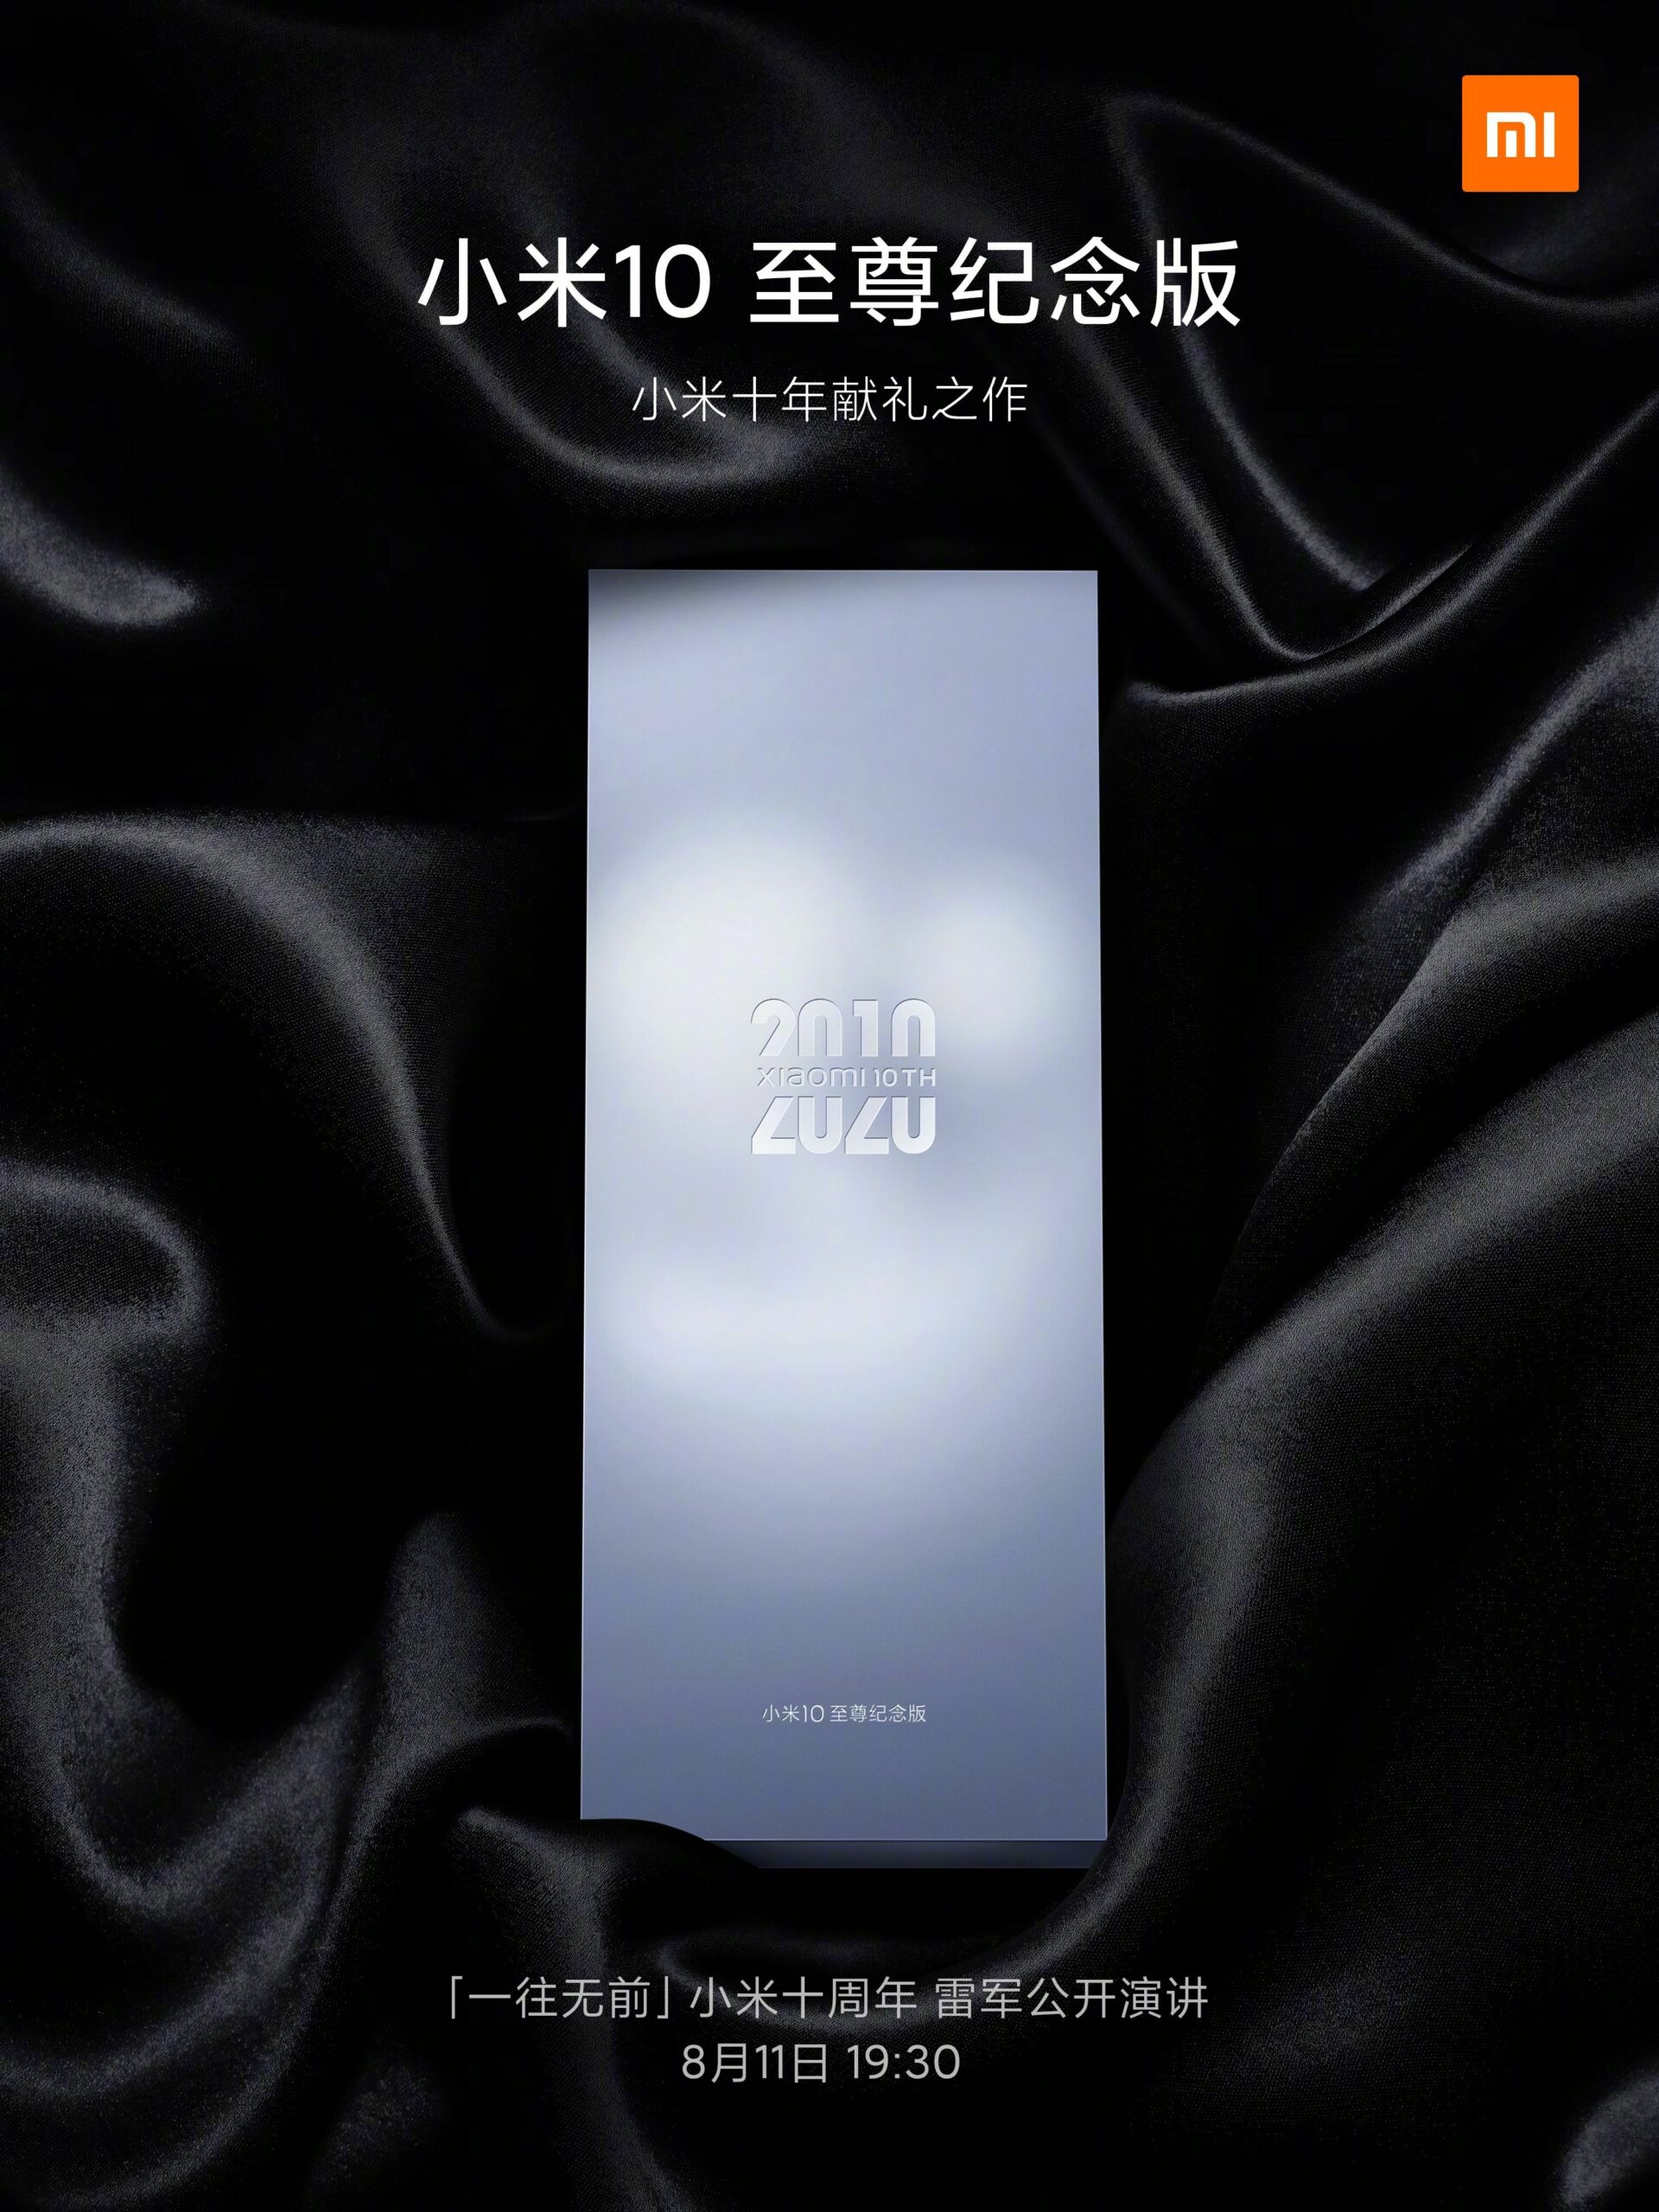 Xiaomi Mi 10 Extreme Commemorative Edition 11 augusti lansering